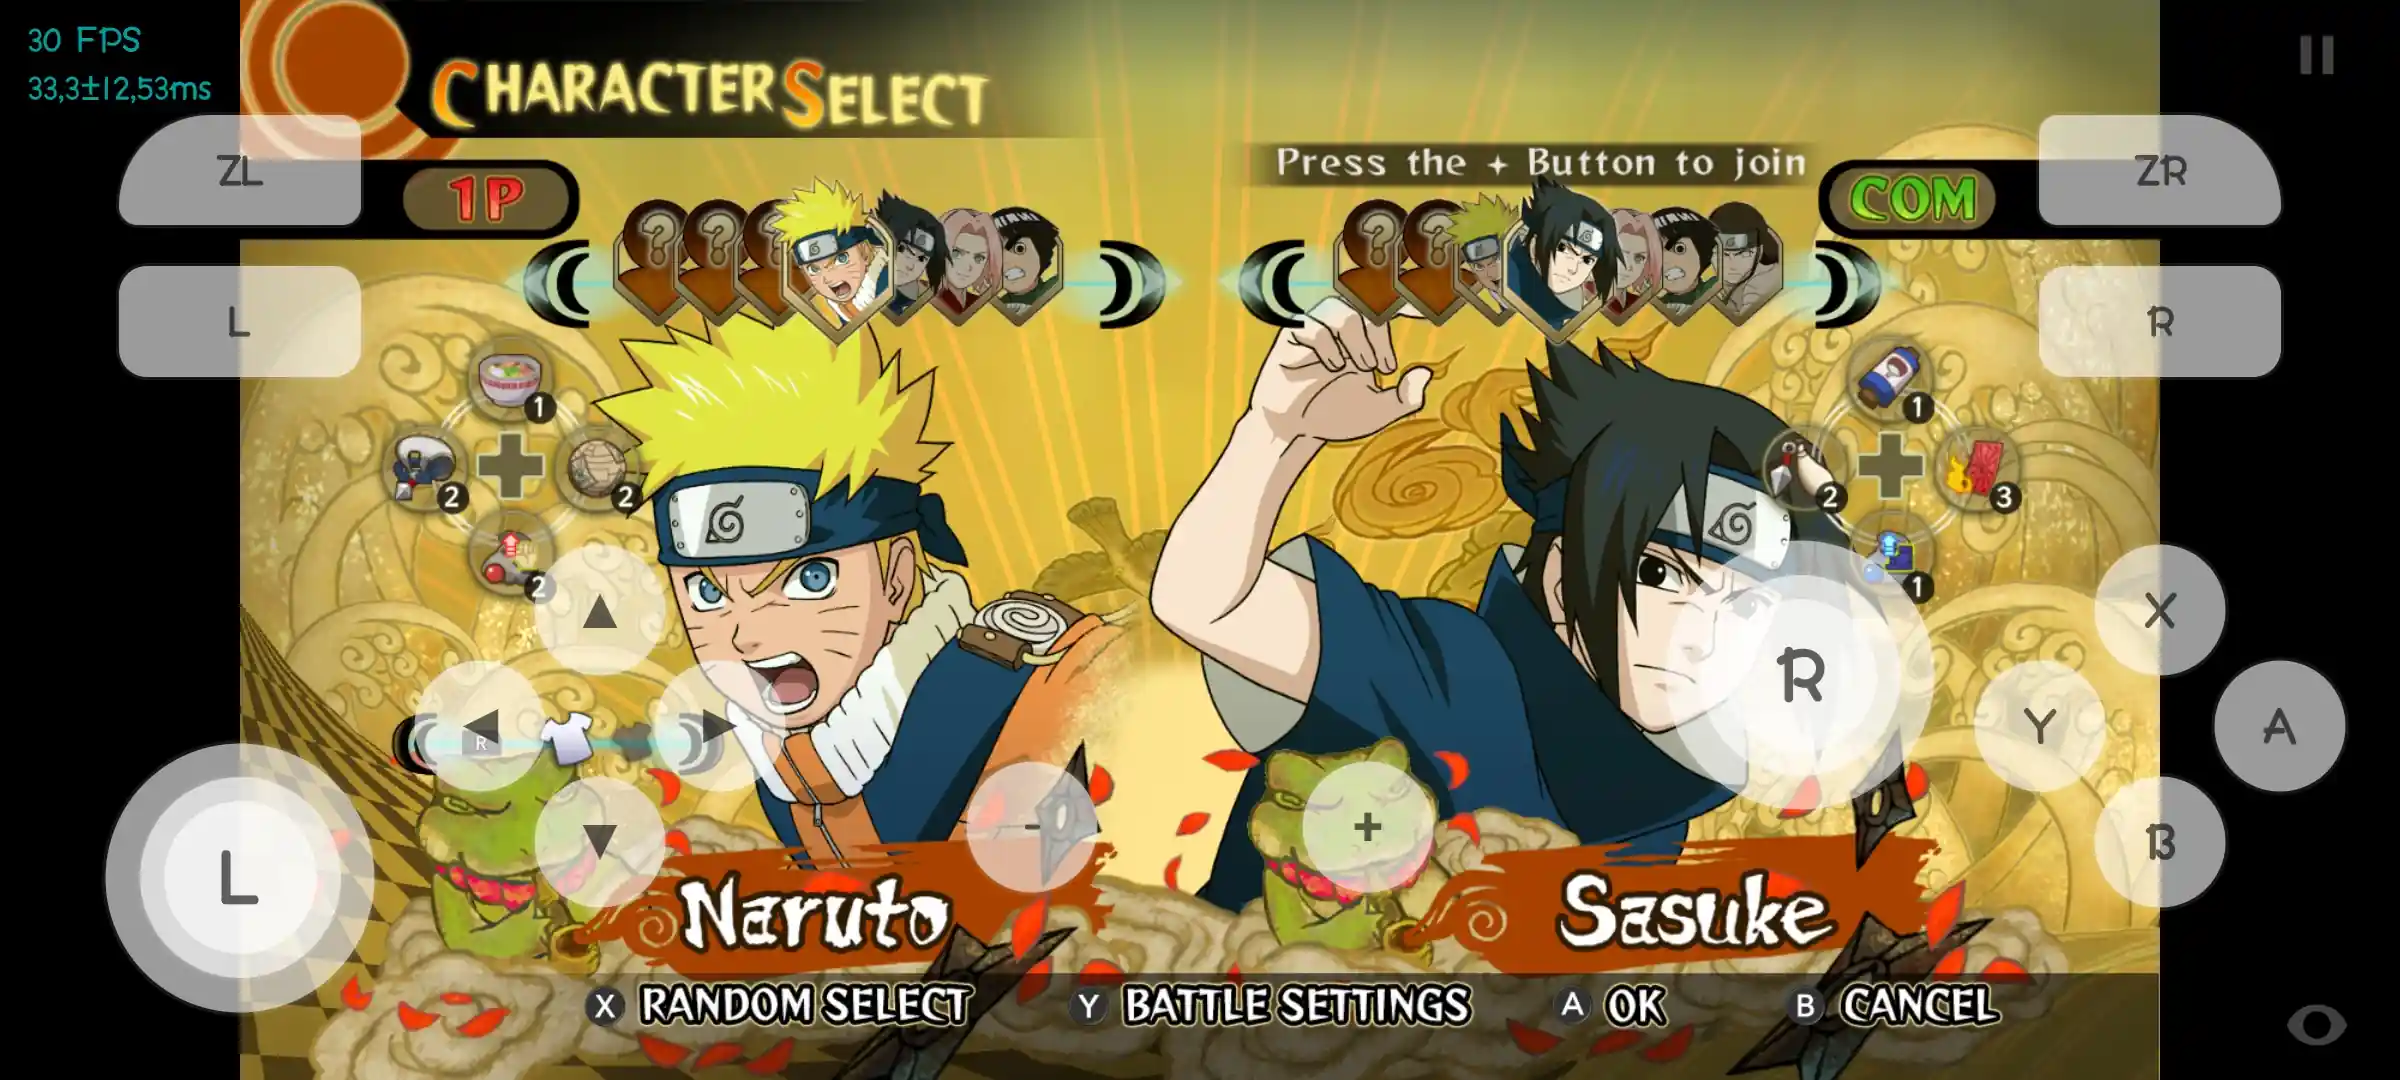 Naruto Ultimate Ninja Storm APK + OBB - Télécharger Android - Émulateur Skyline Edge